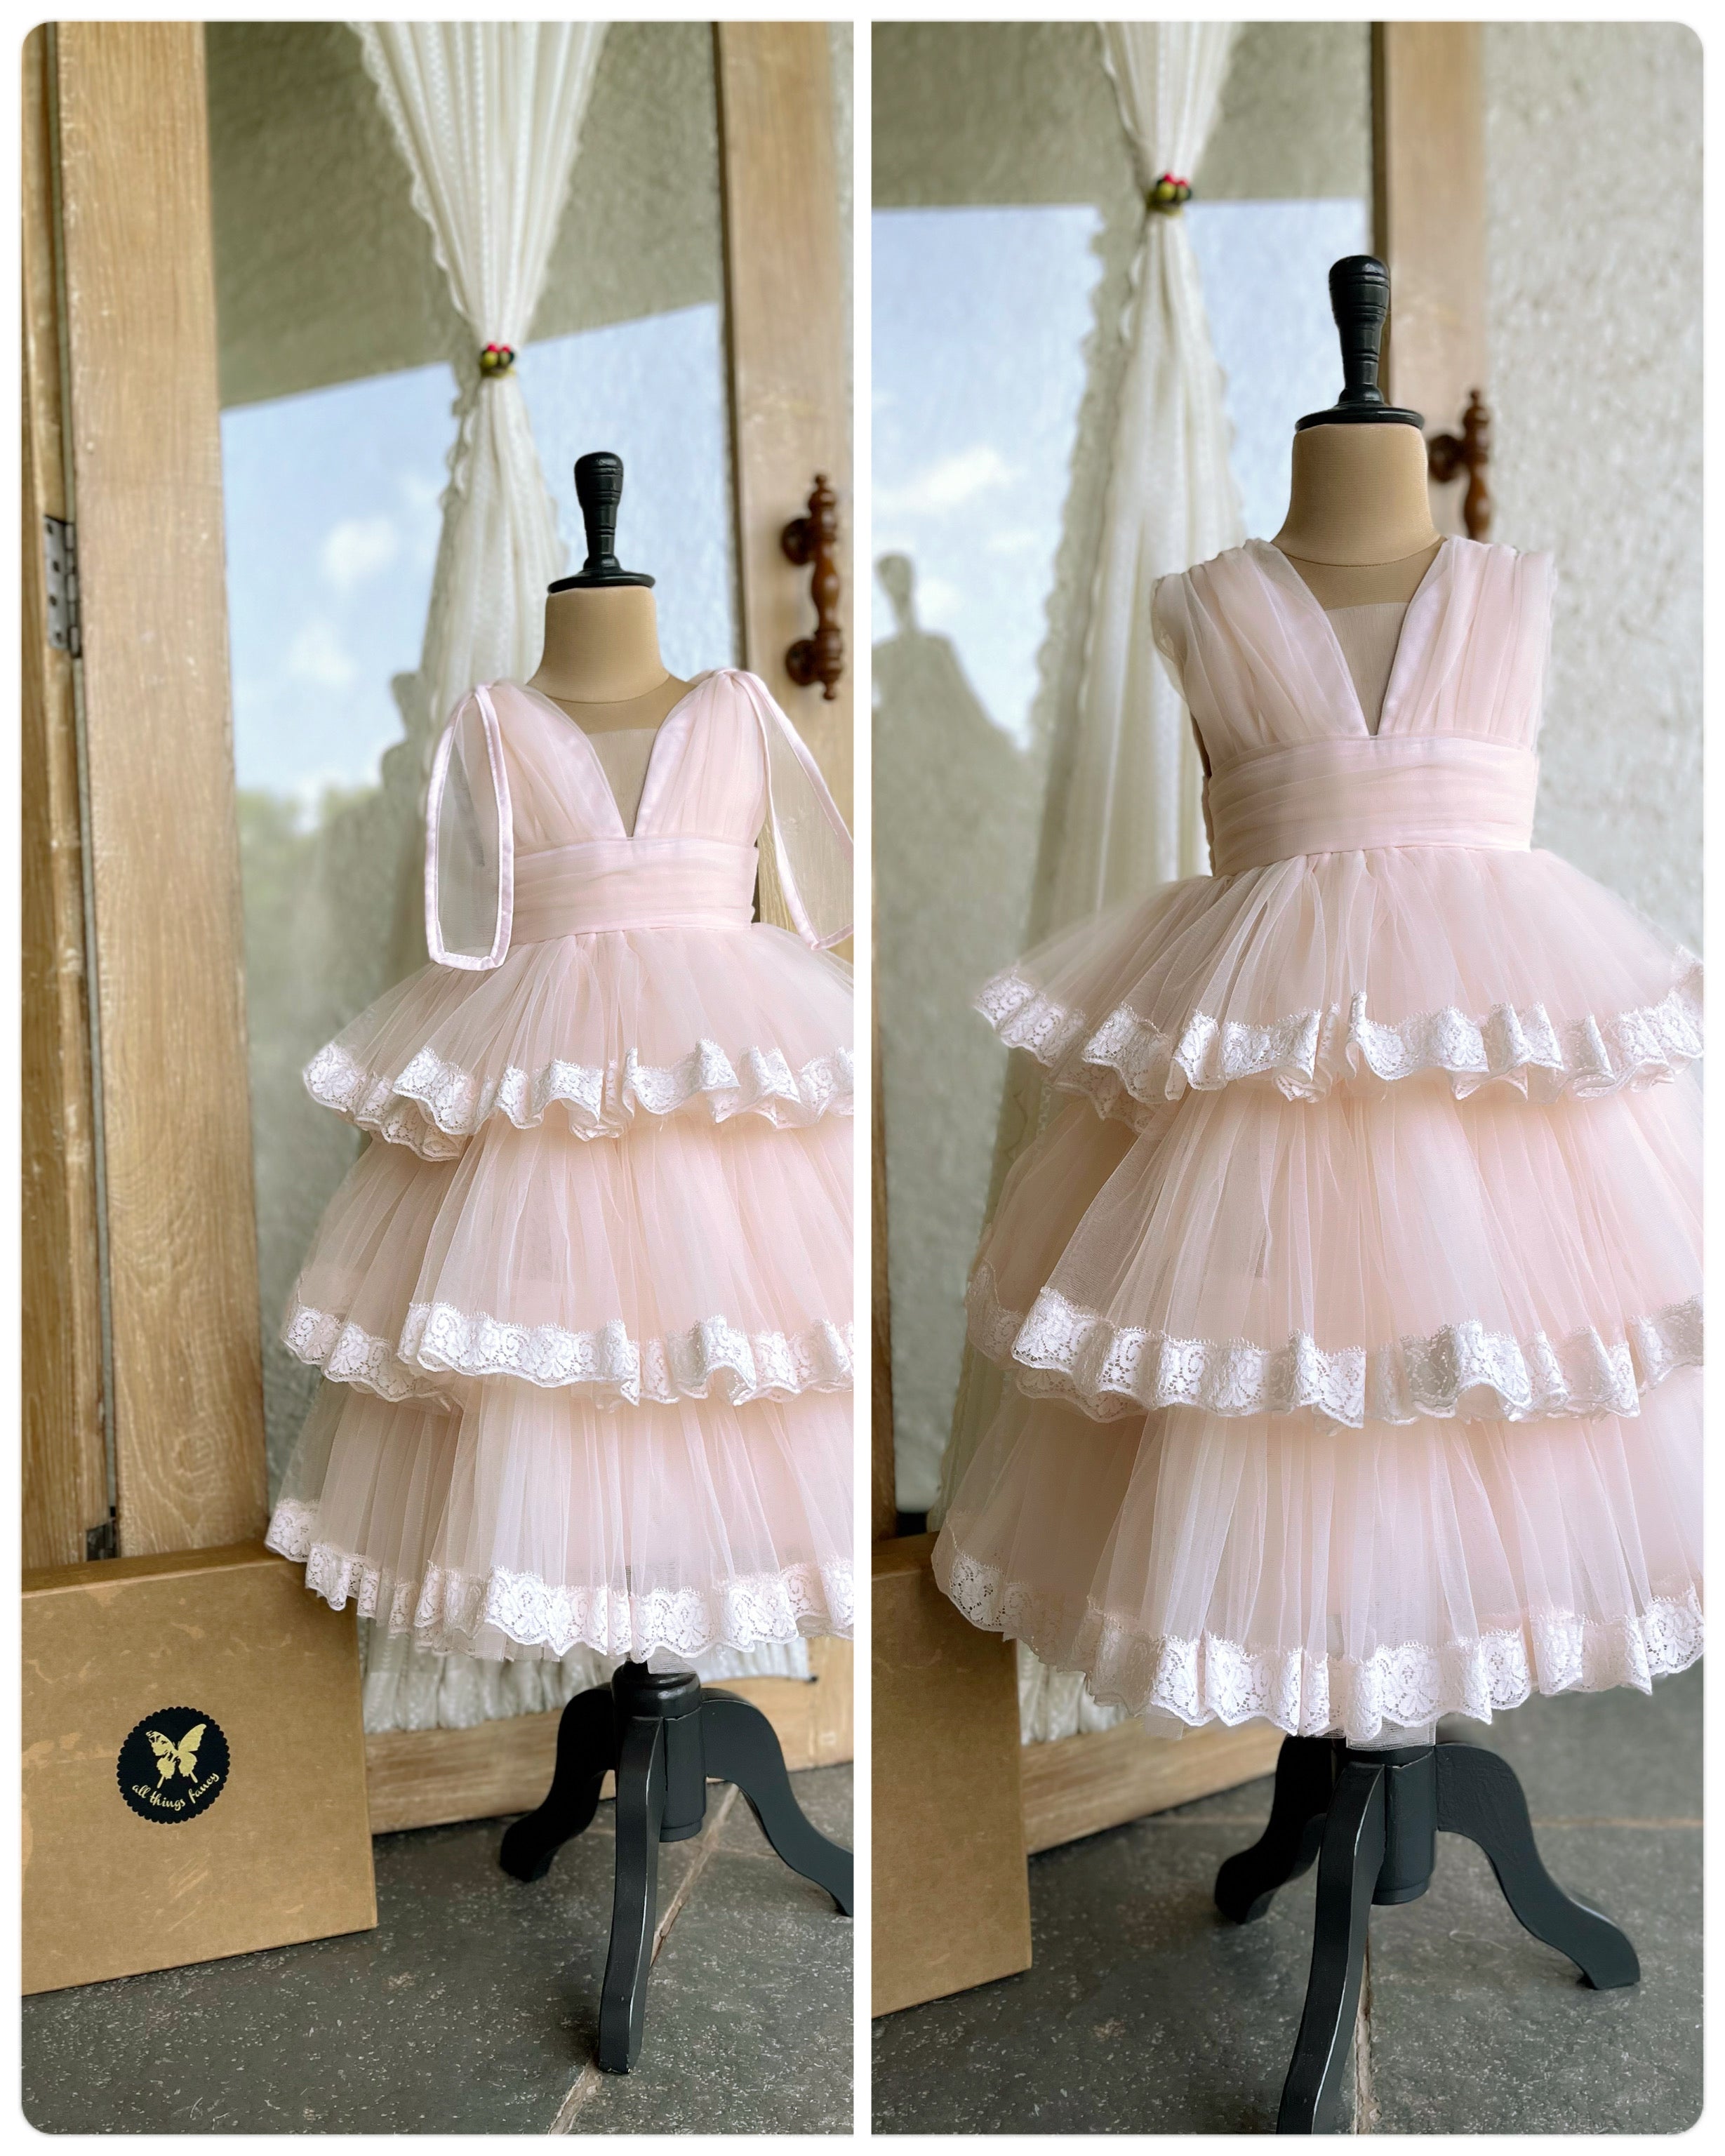 The Princess Dress- Pale pink